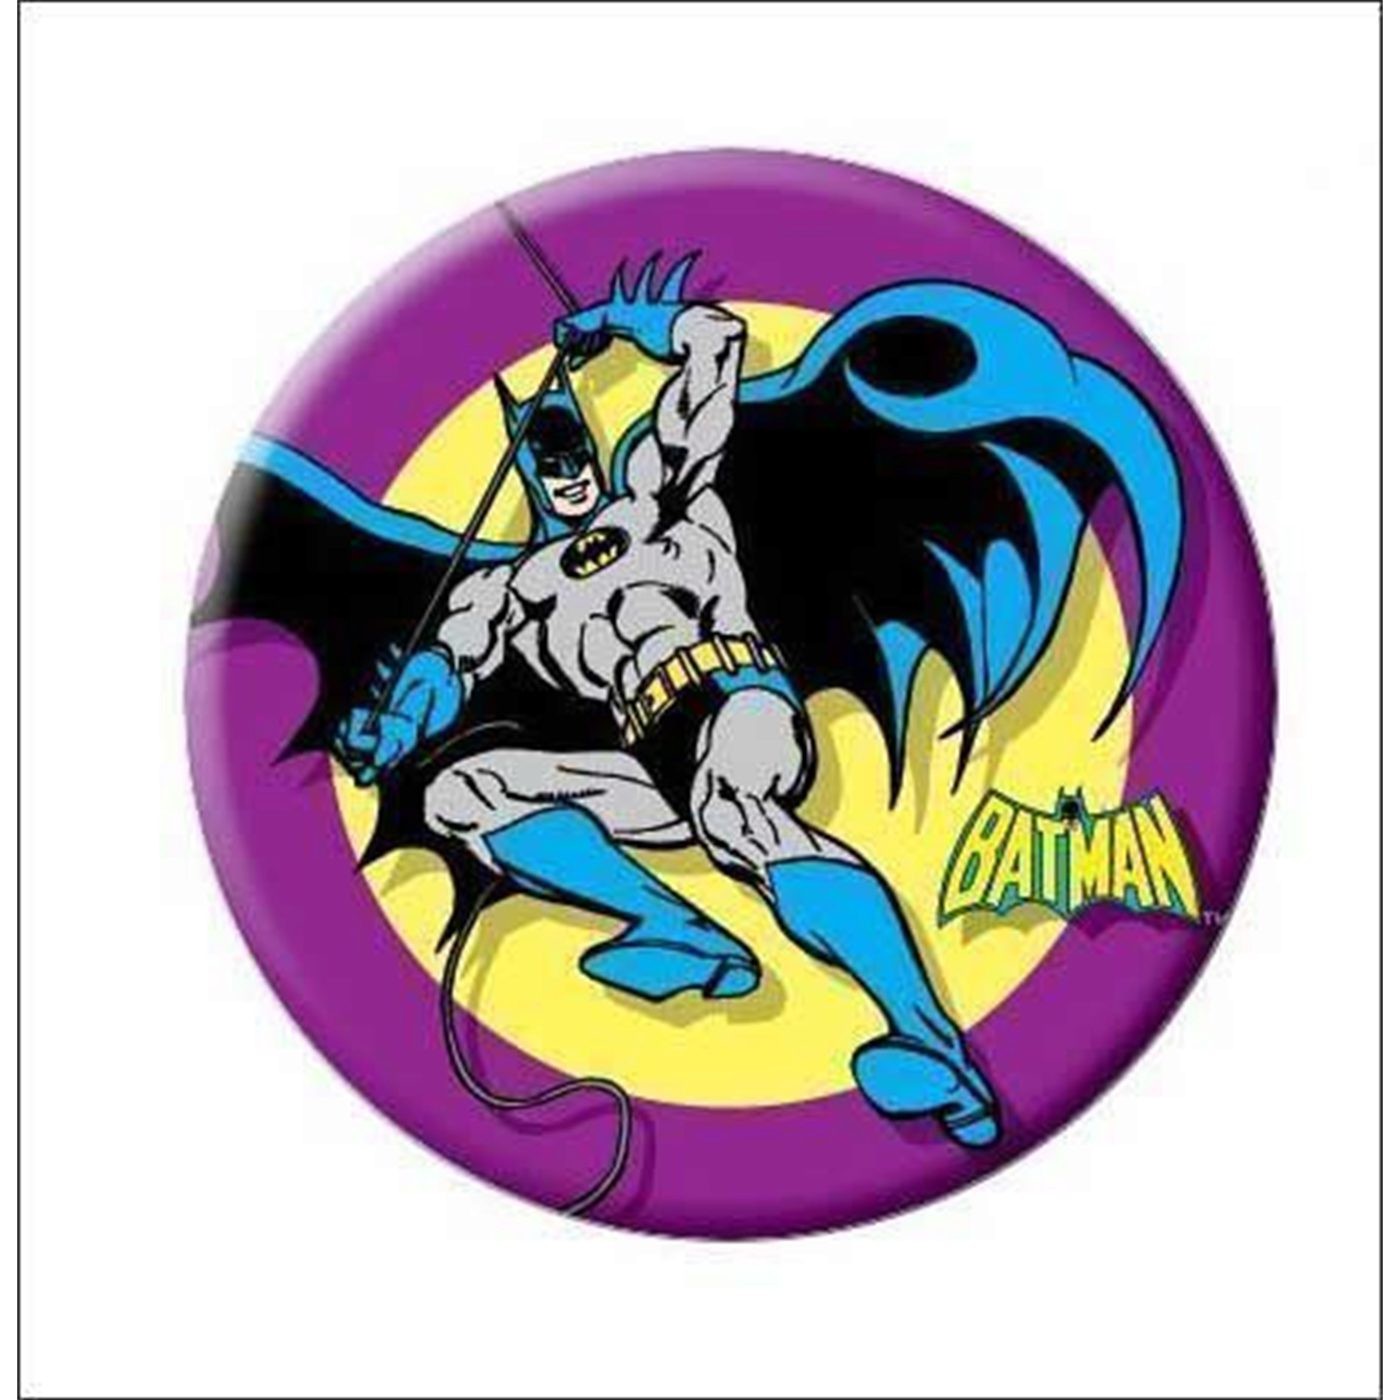 Batman Button Swinging